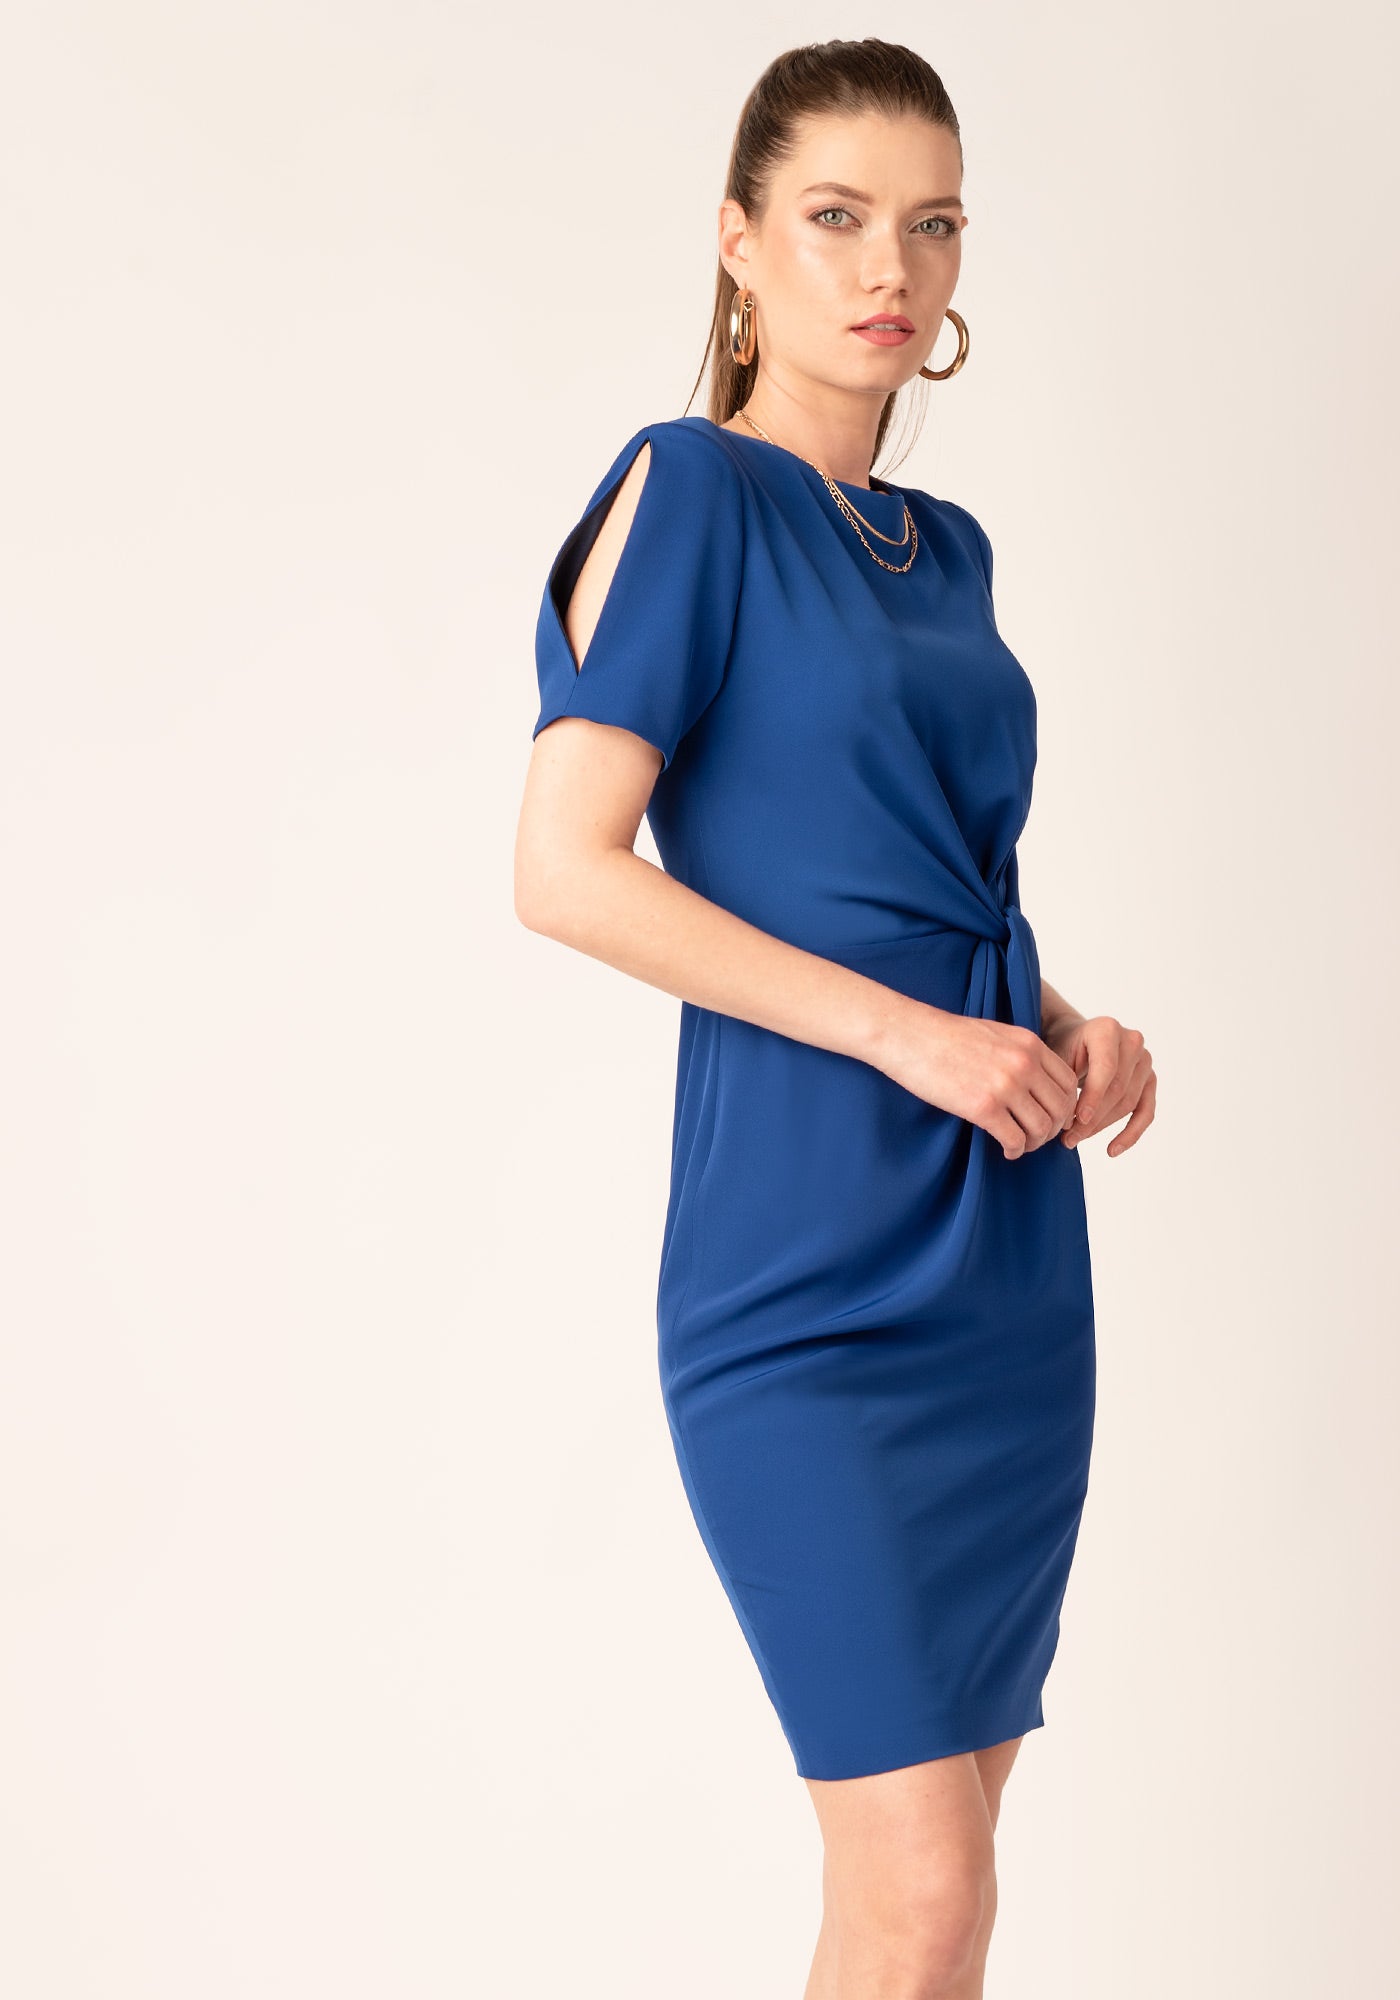 Elegant Twisted Front Midi Occasion Dress in Indigo blue